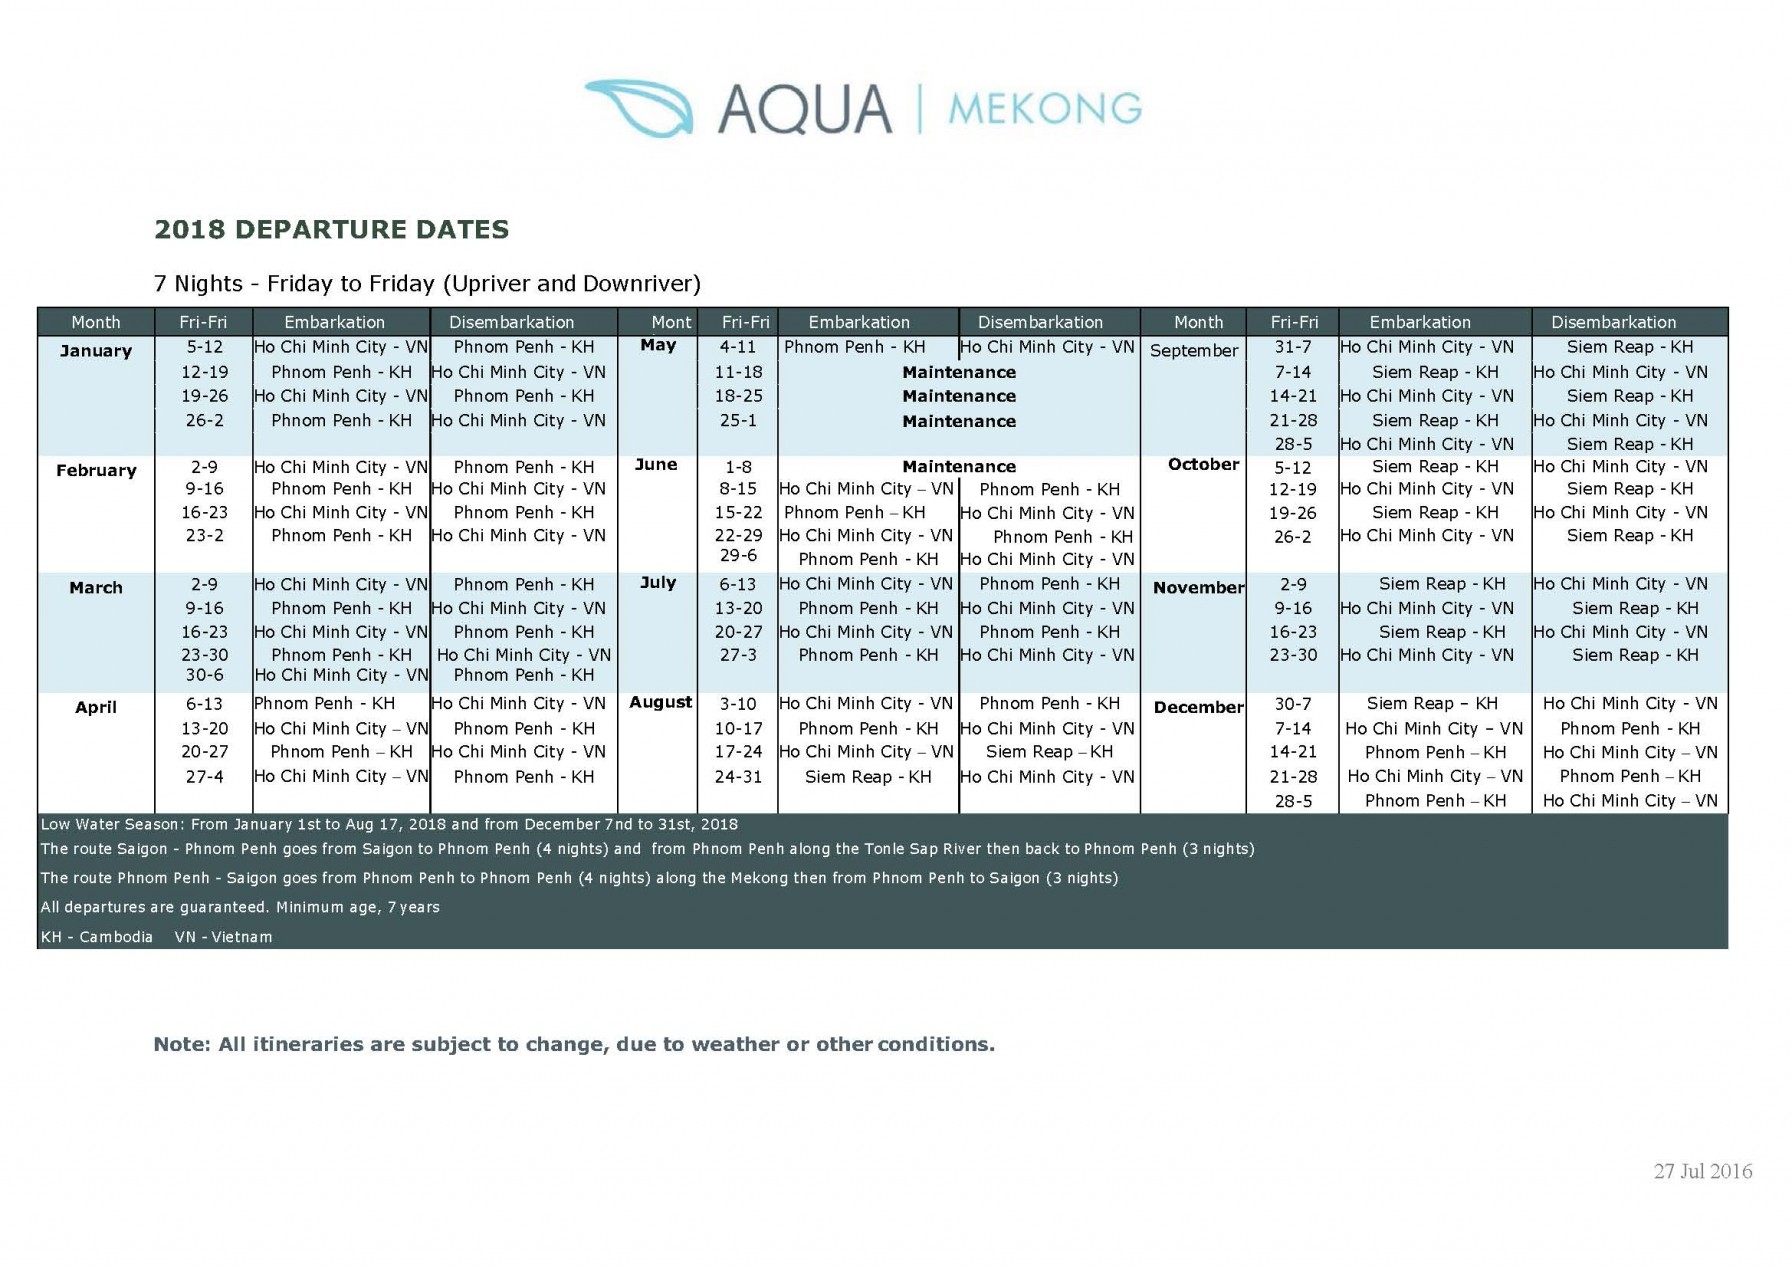 AQUA MEKONG - 2018 Departure Dates_Page_1.jpg